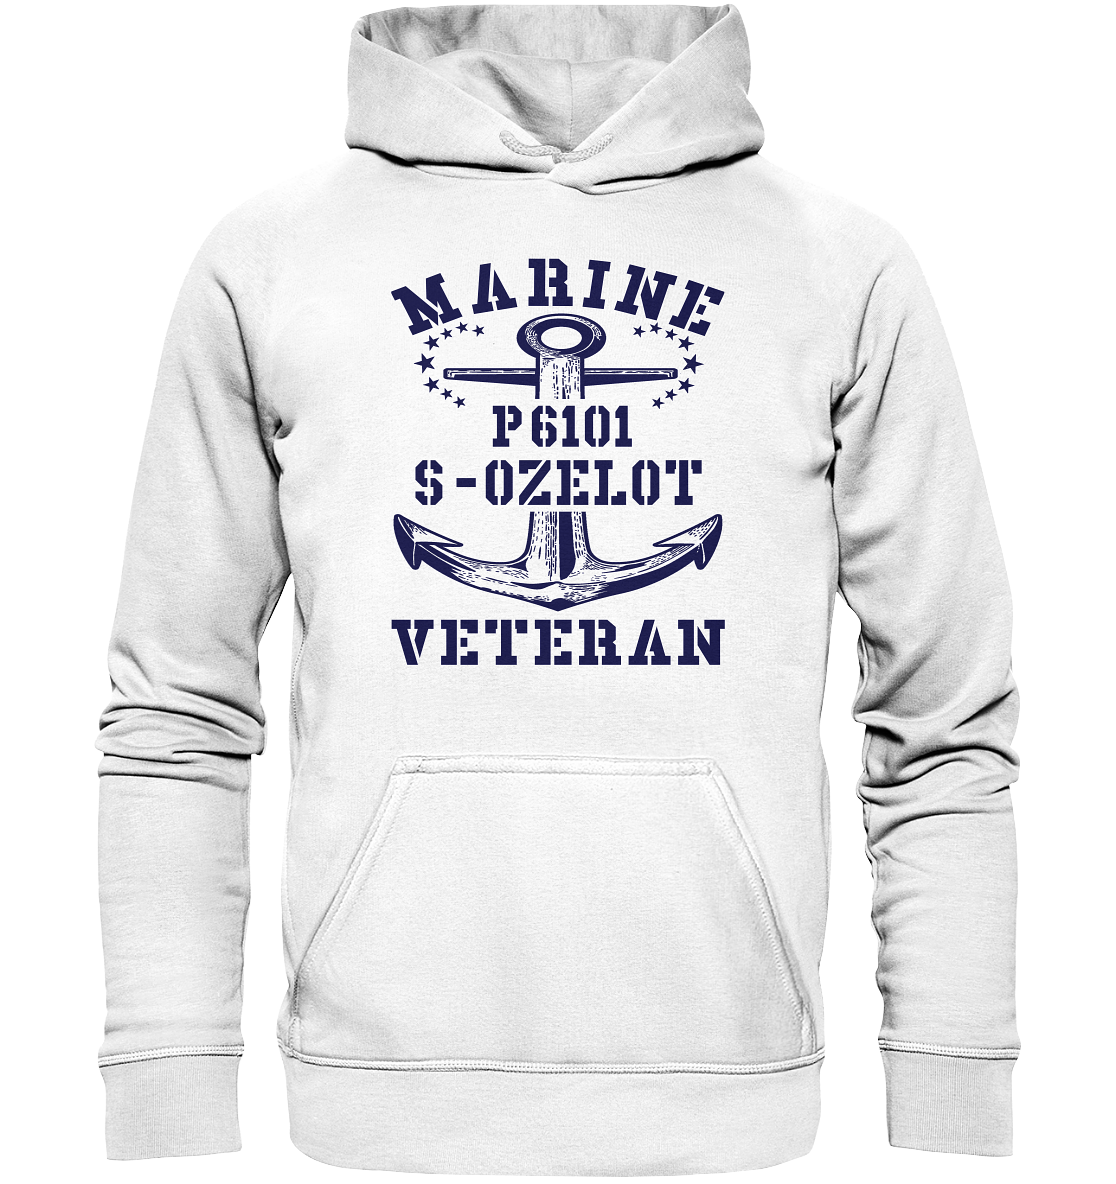 P6101 S-OZELOT Marine Veteran - Basic Unisex Hoodie